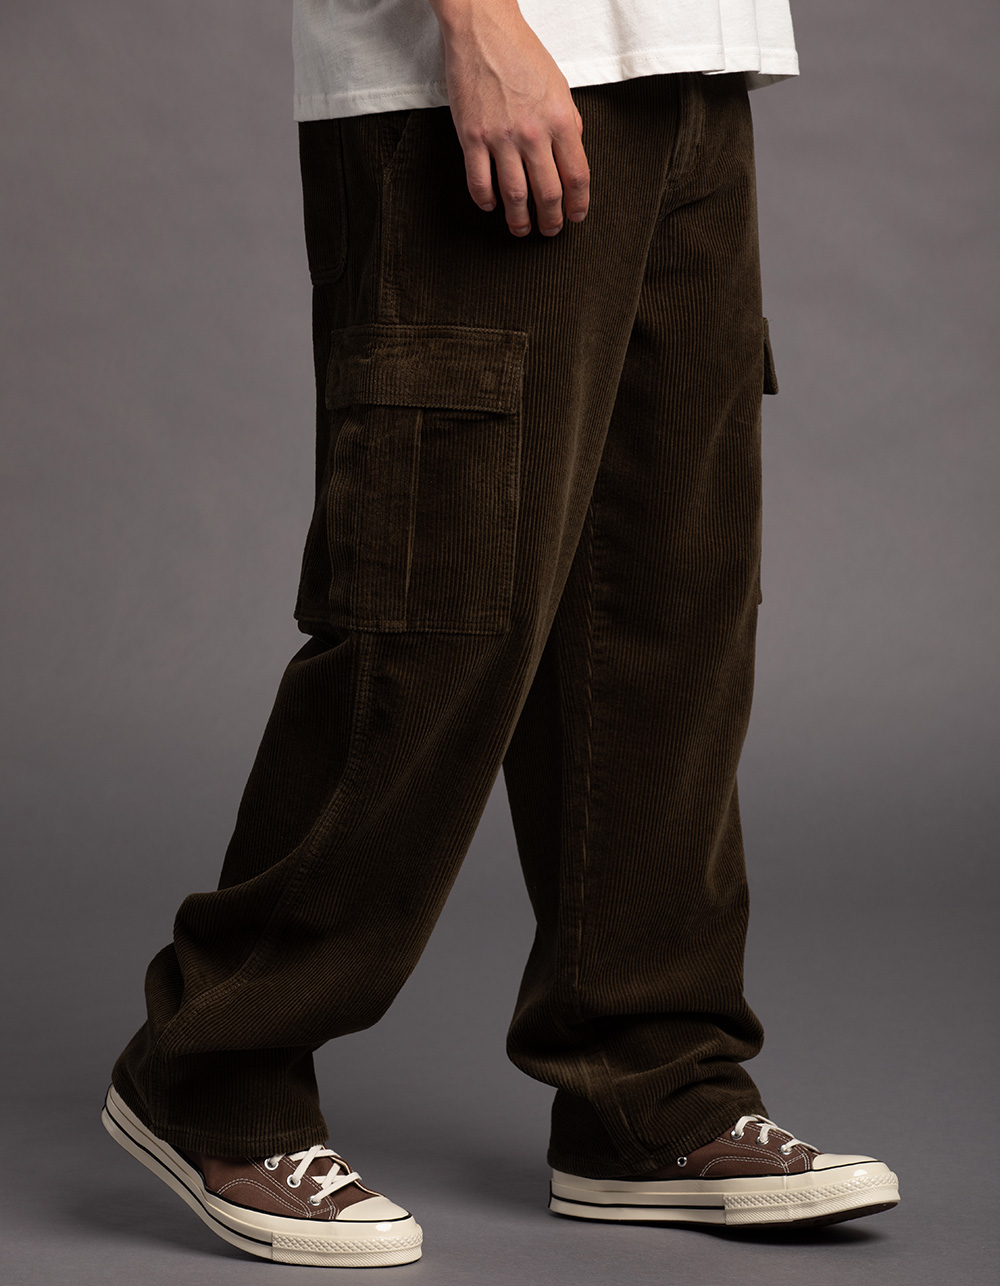 Buy Big T Corduroy Cargo Pant Men's Jeans & Pants from True